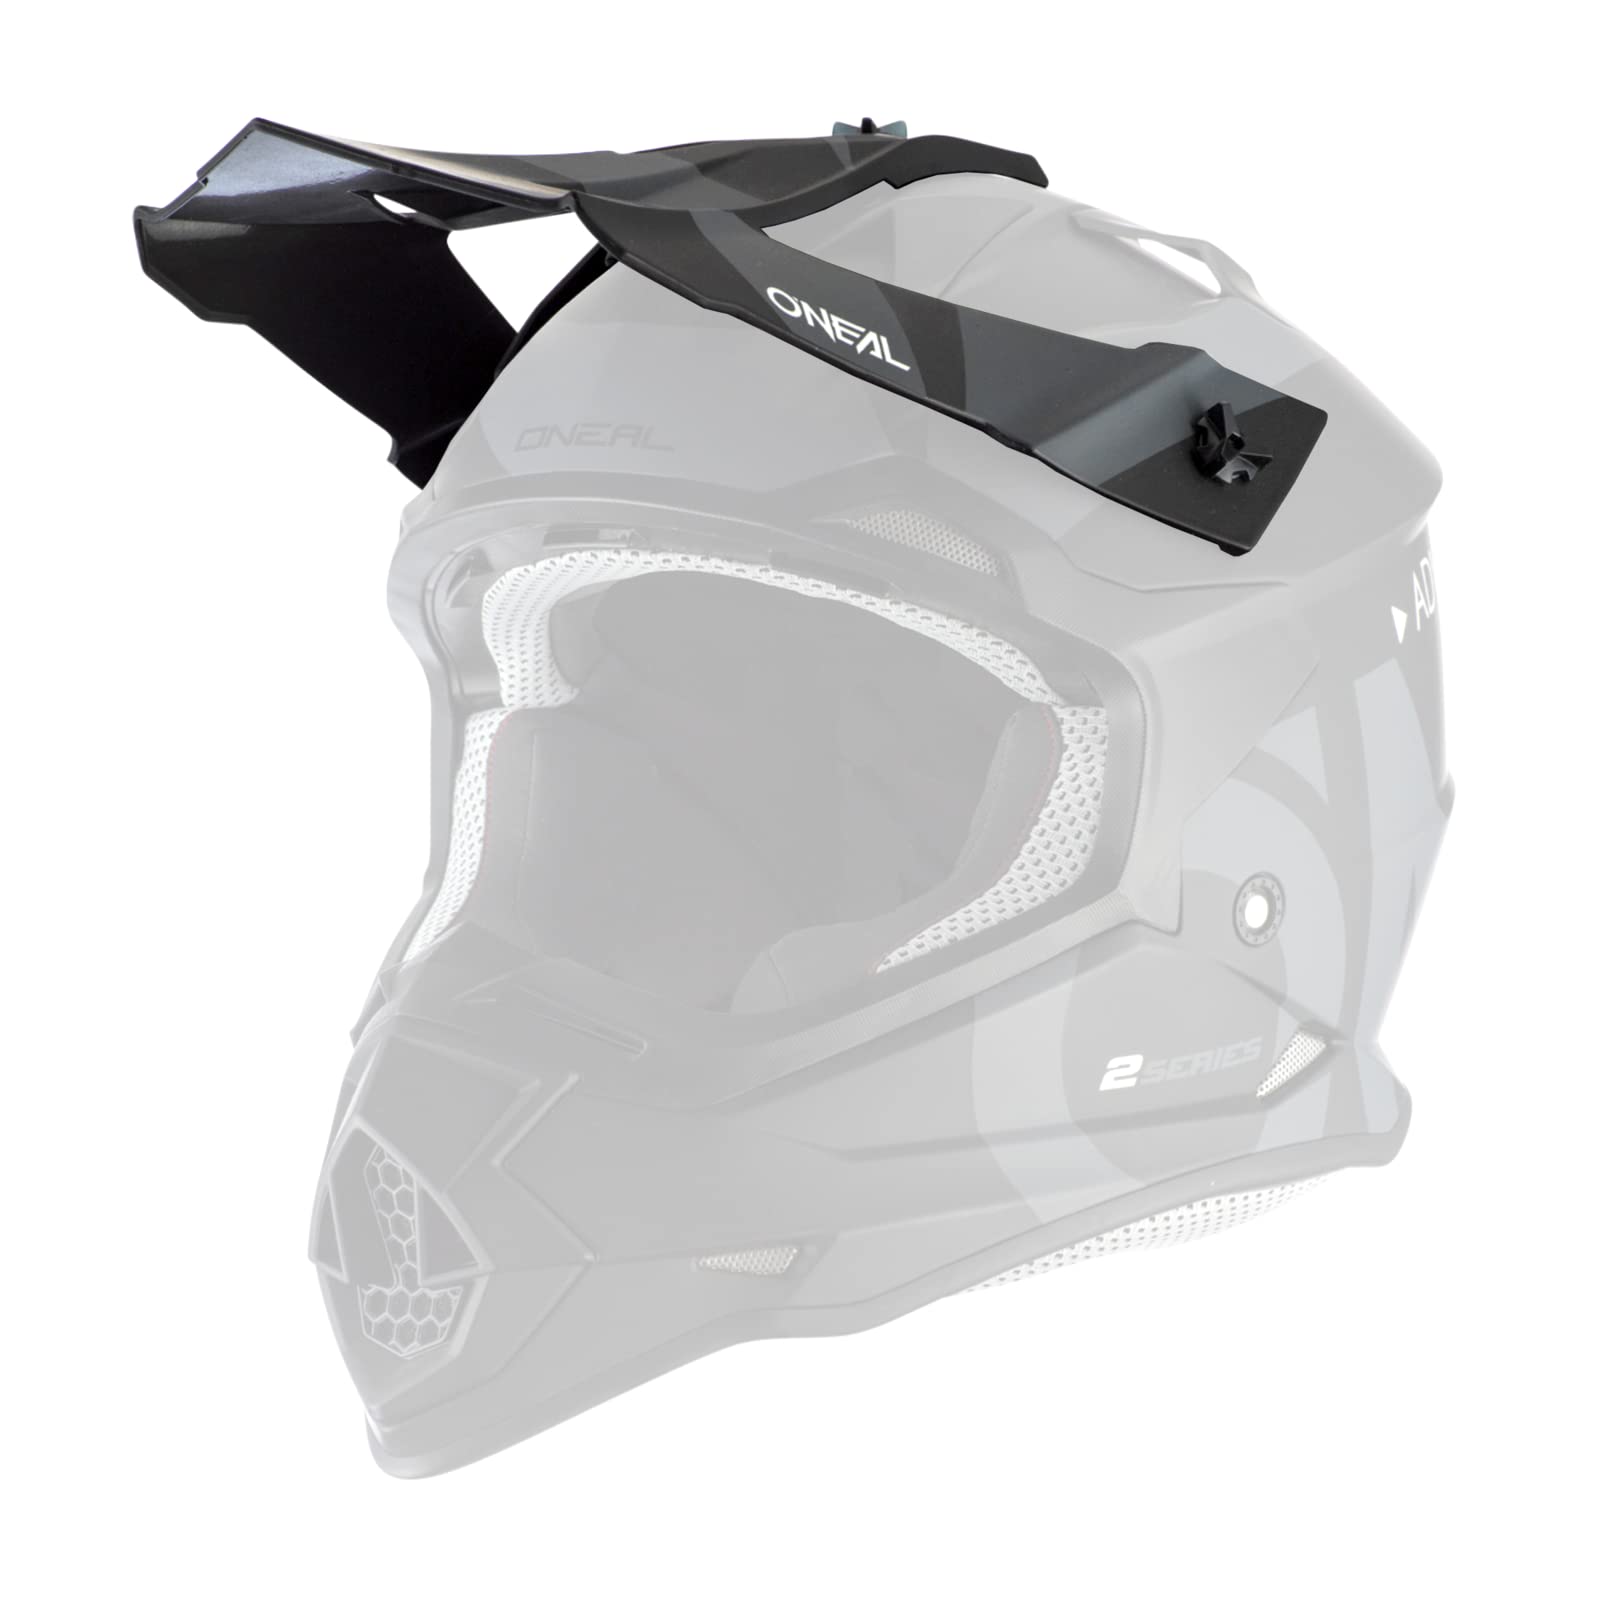 O'NEAL | Ersatzschirm Motocross-Helm | Motocross MX Enduro | Ersatzschirm für den 2SRS Helm Slick | Spare Visor 2SRS Helmet SLICK | Erwachsene | Schwarz Grau von O'NEAL